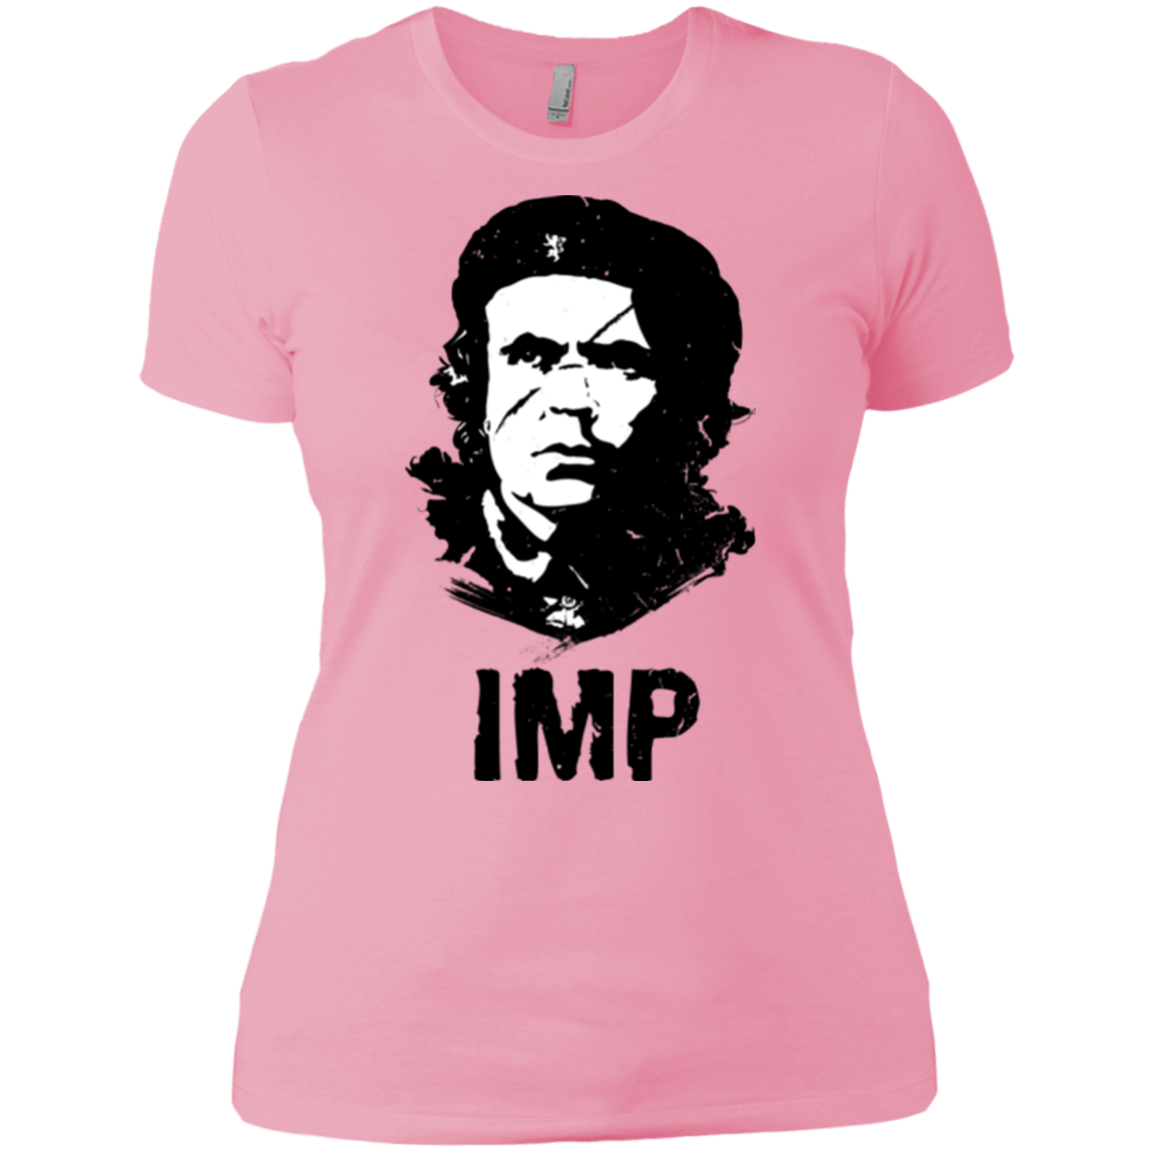 T-Shirts Light Pink / X-Small IMP Women's Premium T-Shirt